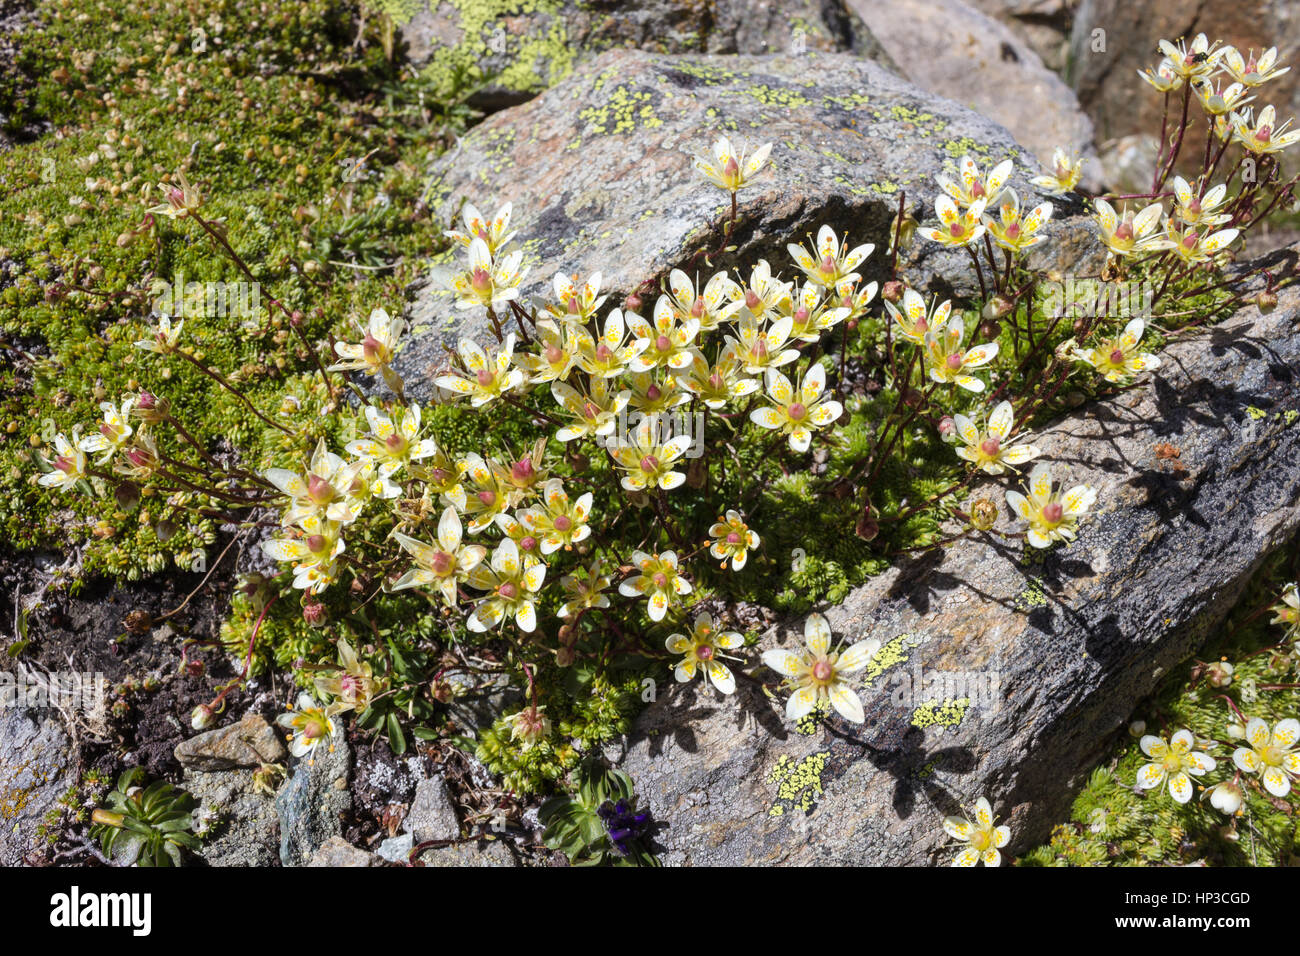 Alpine flower Saxifraga Bryoides (mossy saxifrage), Aosta valley, Italy. Photo taken at an altitude of 2900 meters. Stock Photo